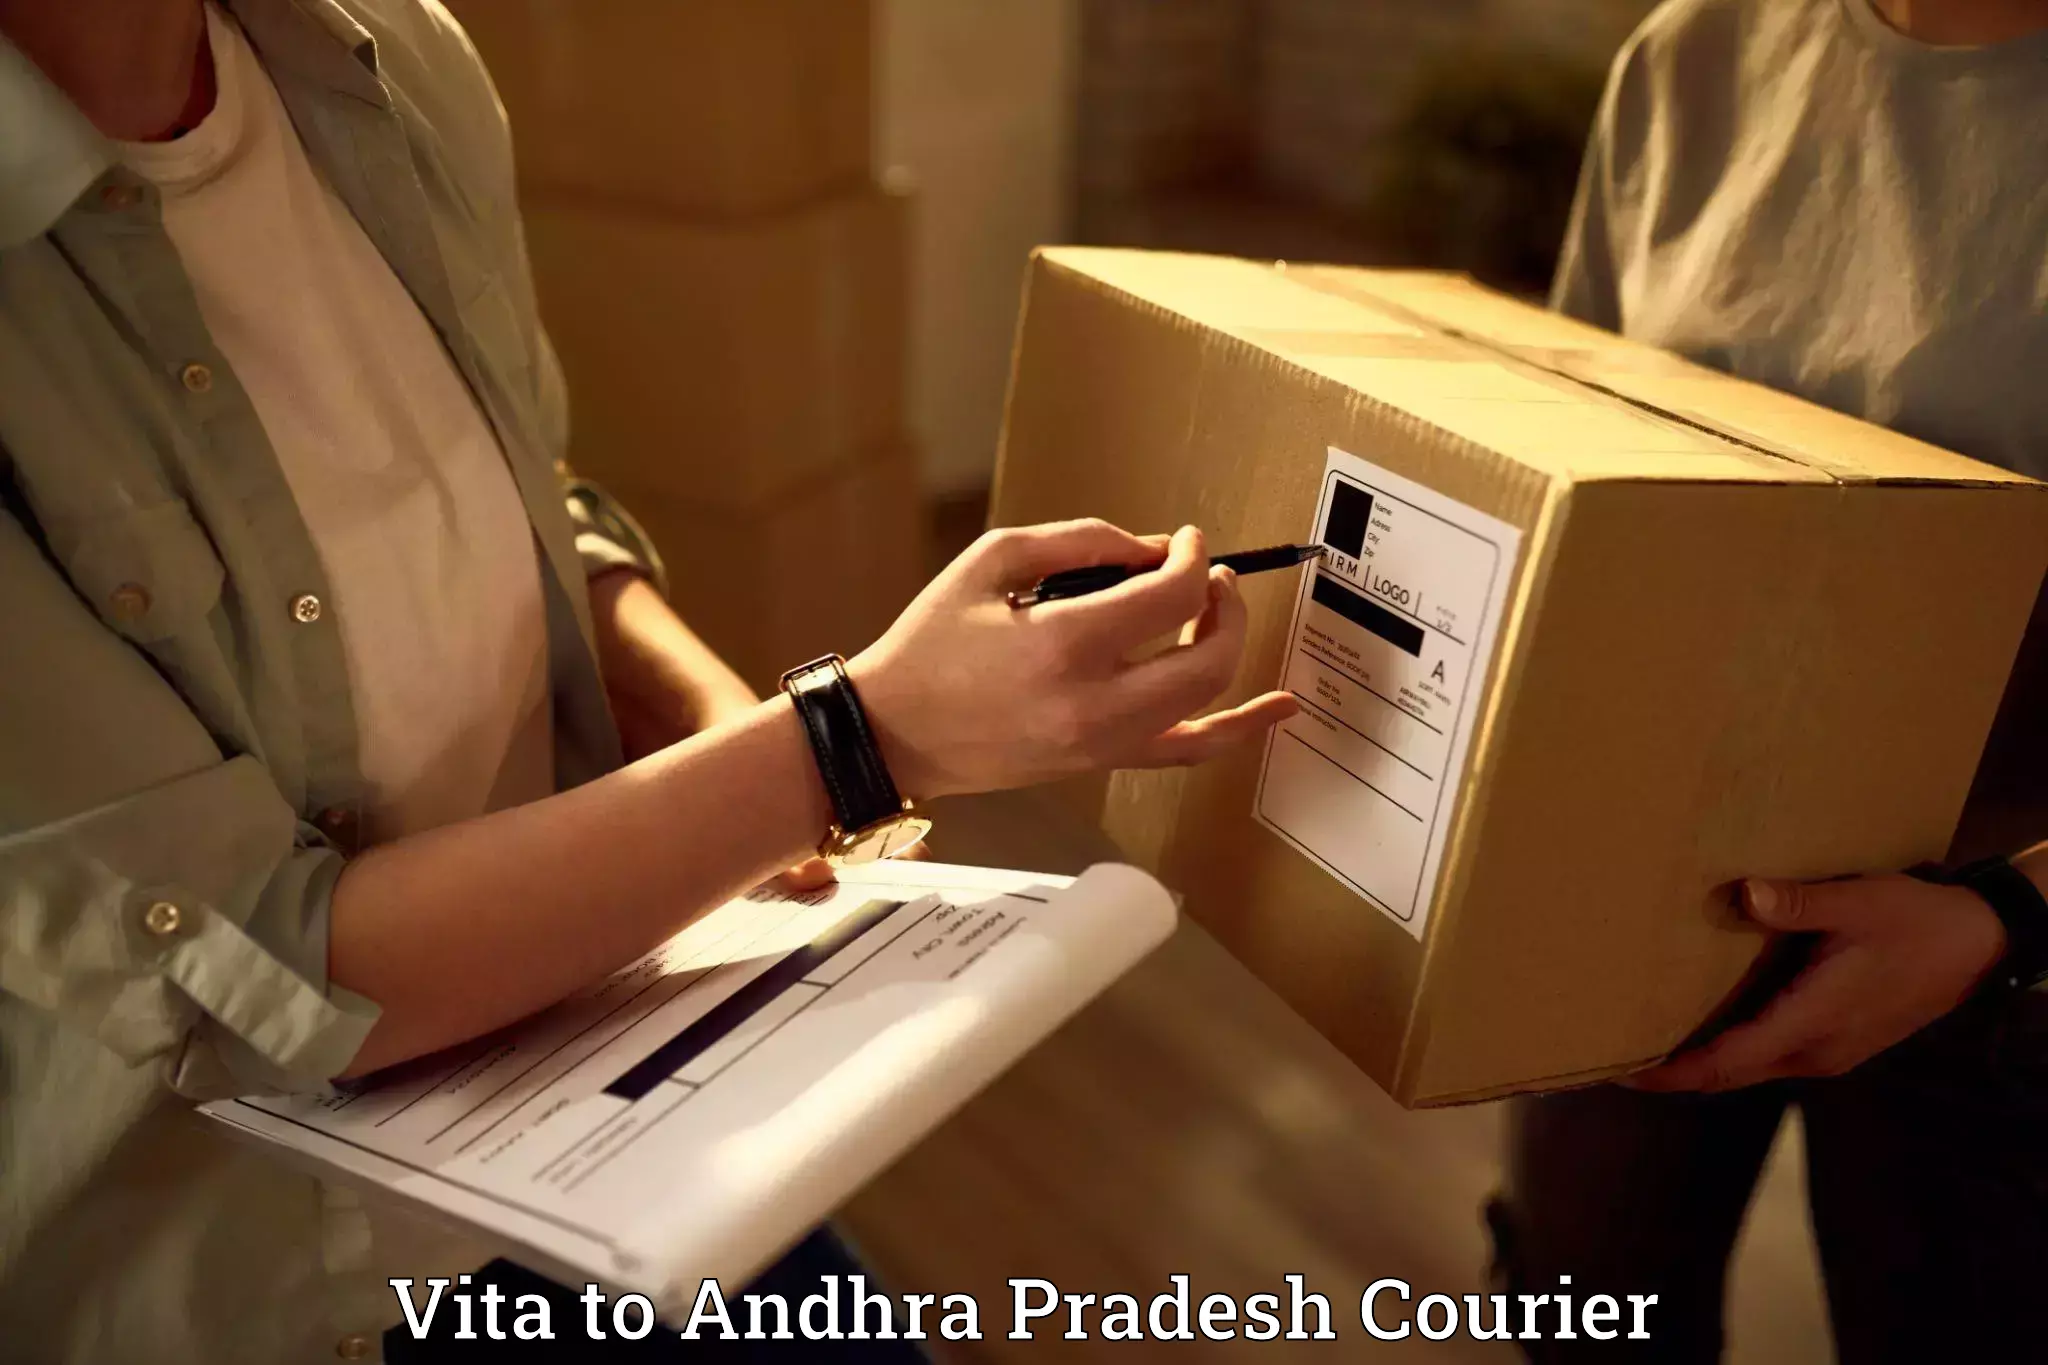 Budget-friendly movers Vita to Andhra Pradesh